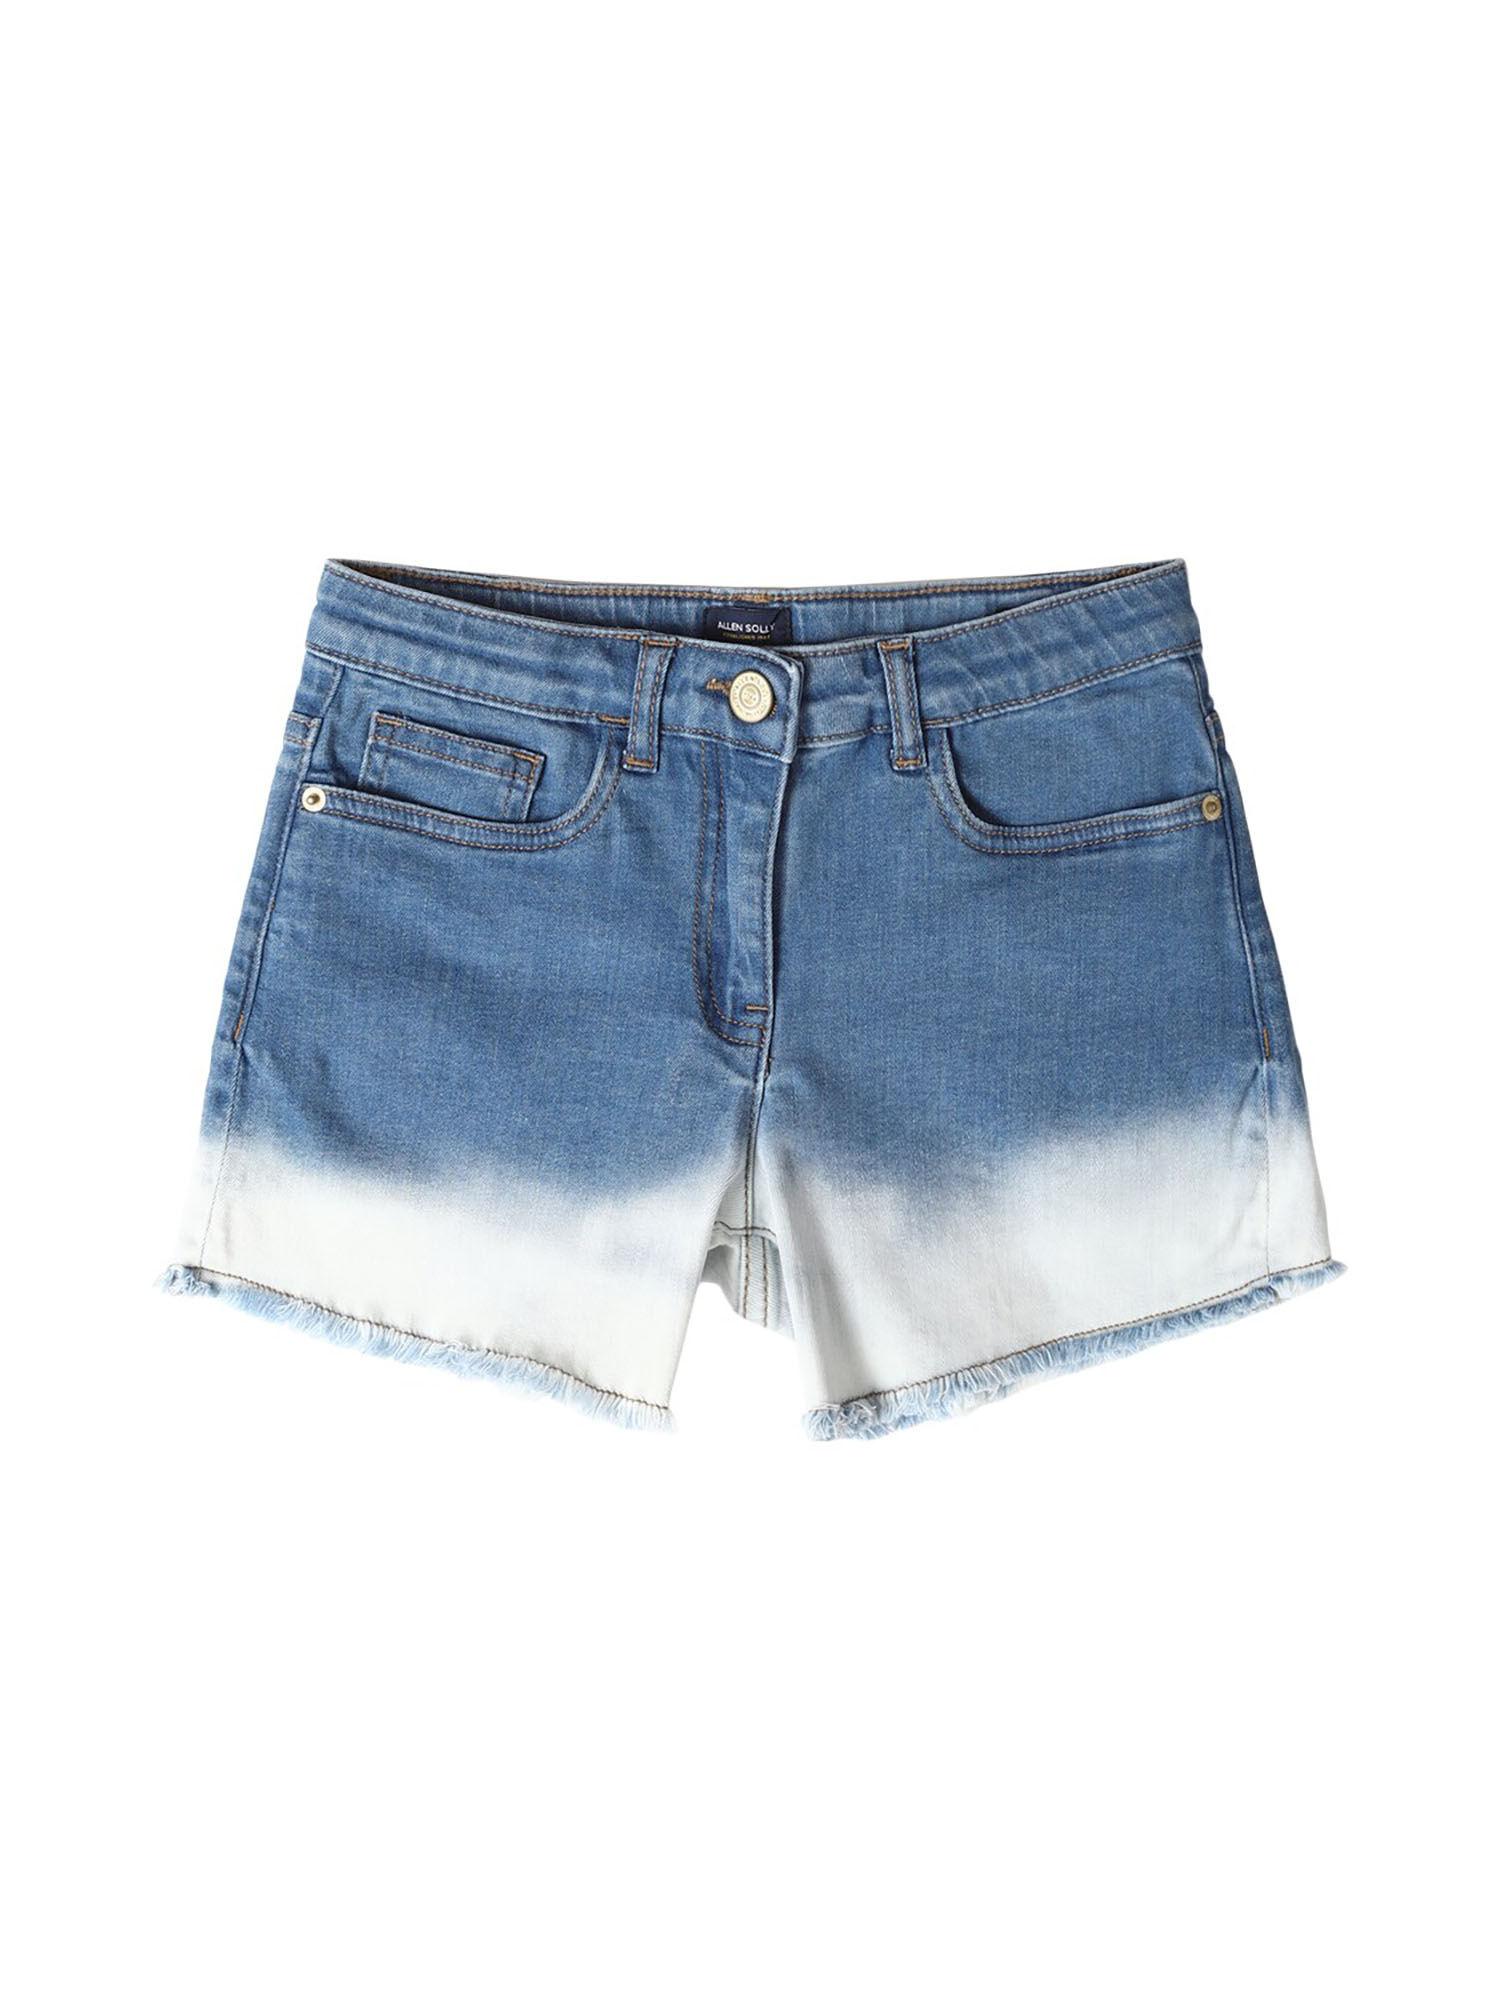 girls-blue-print-regular-fit-shorts